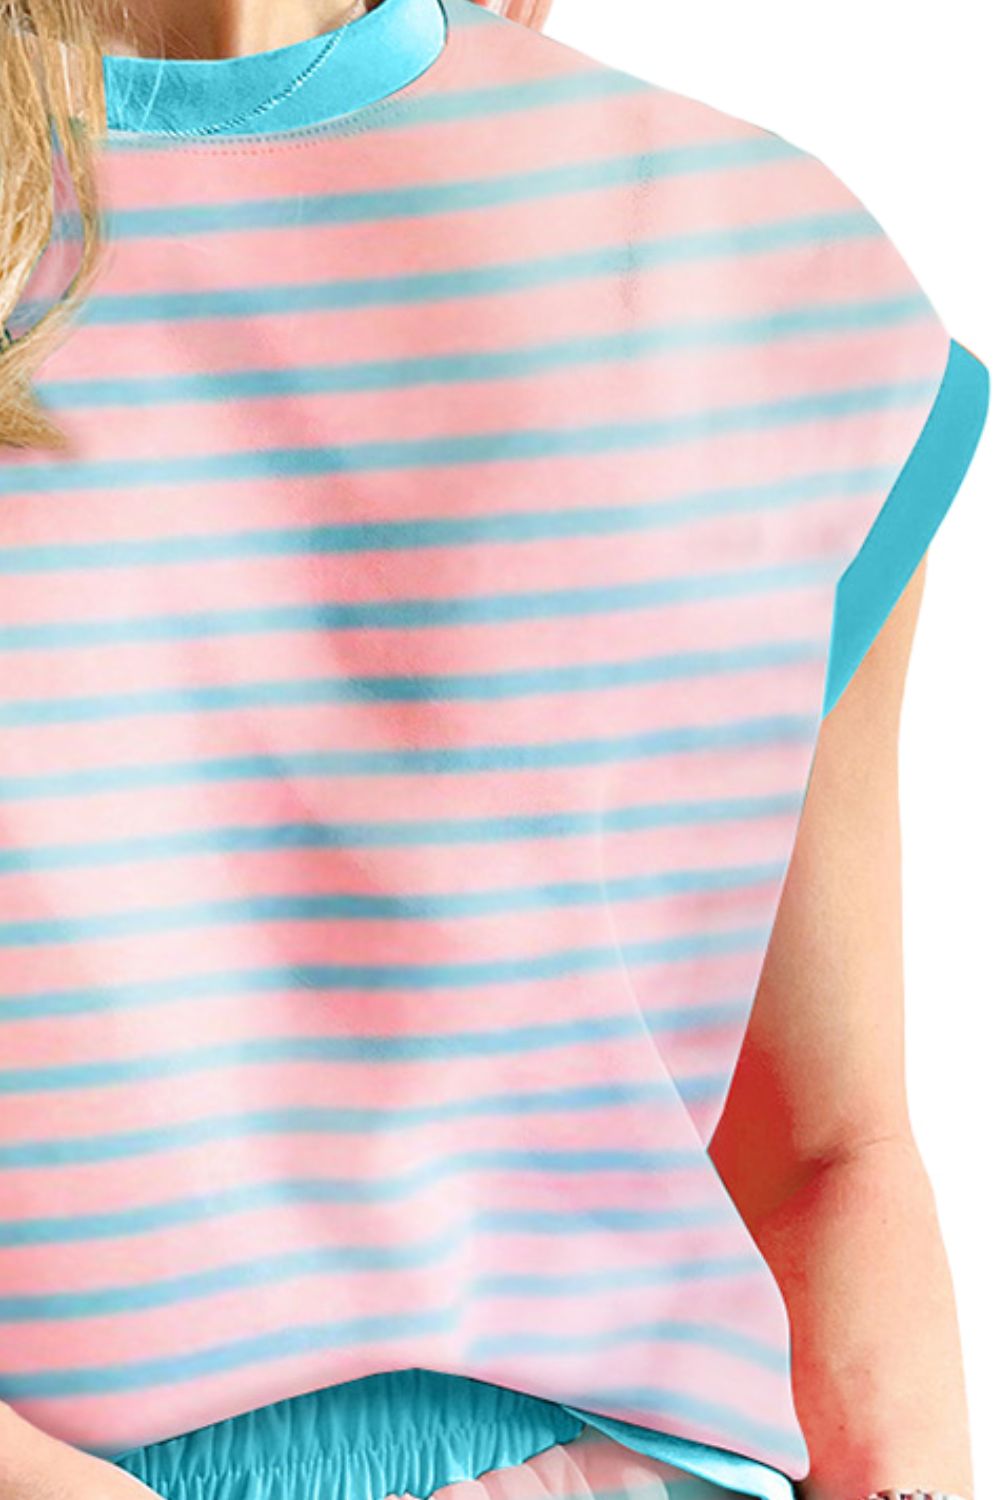 TEEK - Blush Pink Contrast Trim Striped Top Shorts Set SET TEEK Trend   